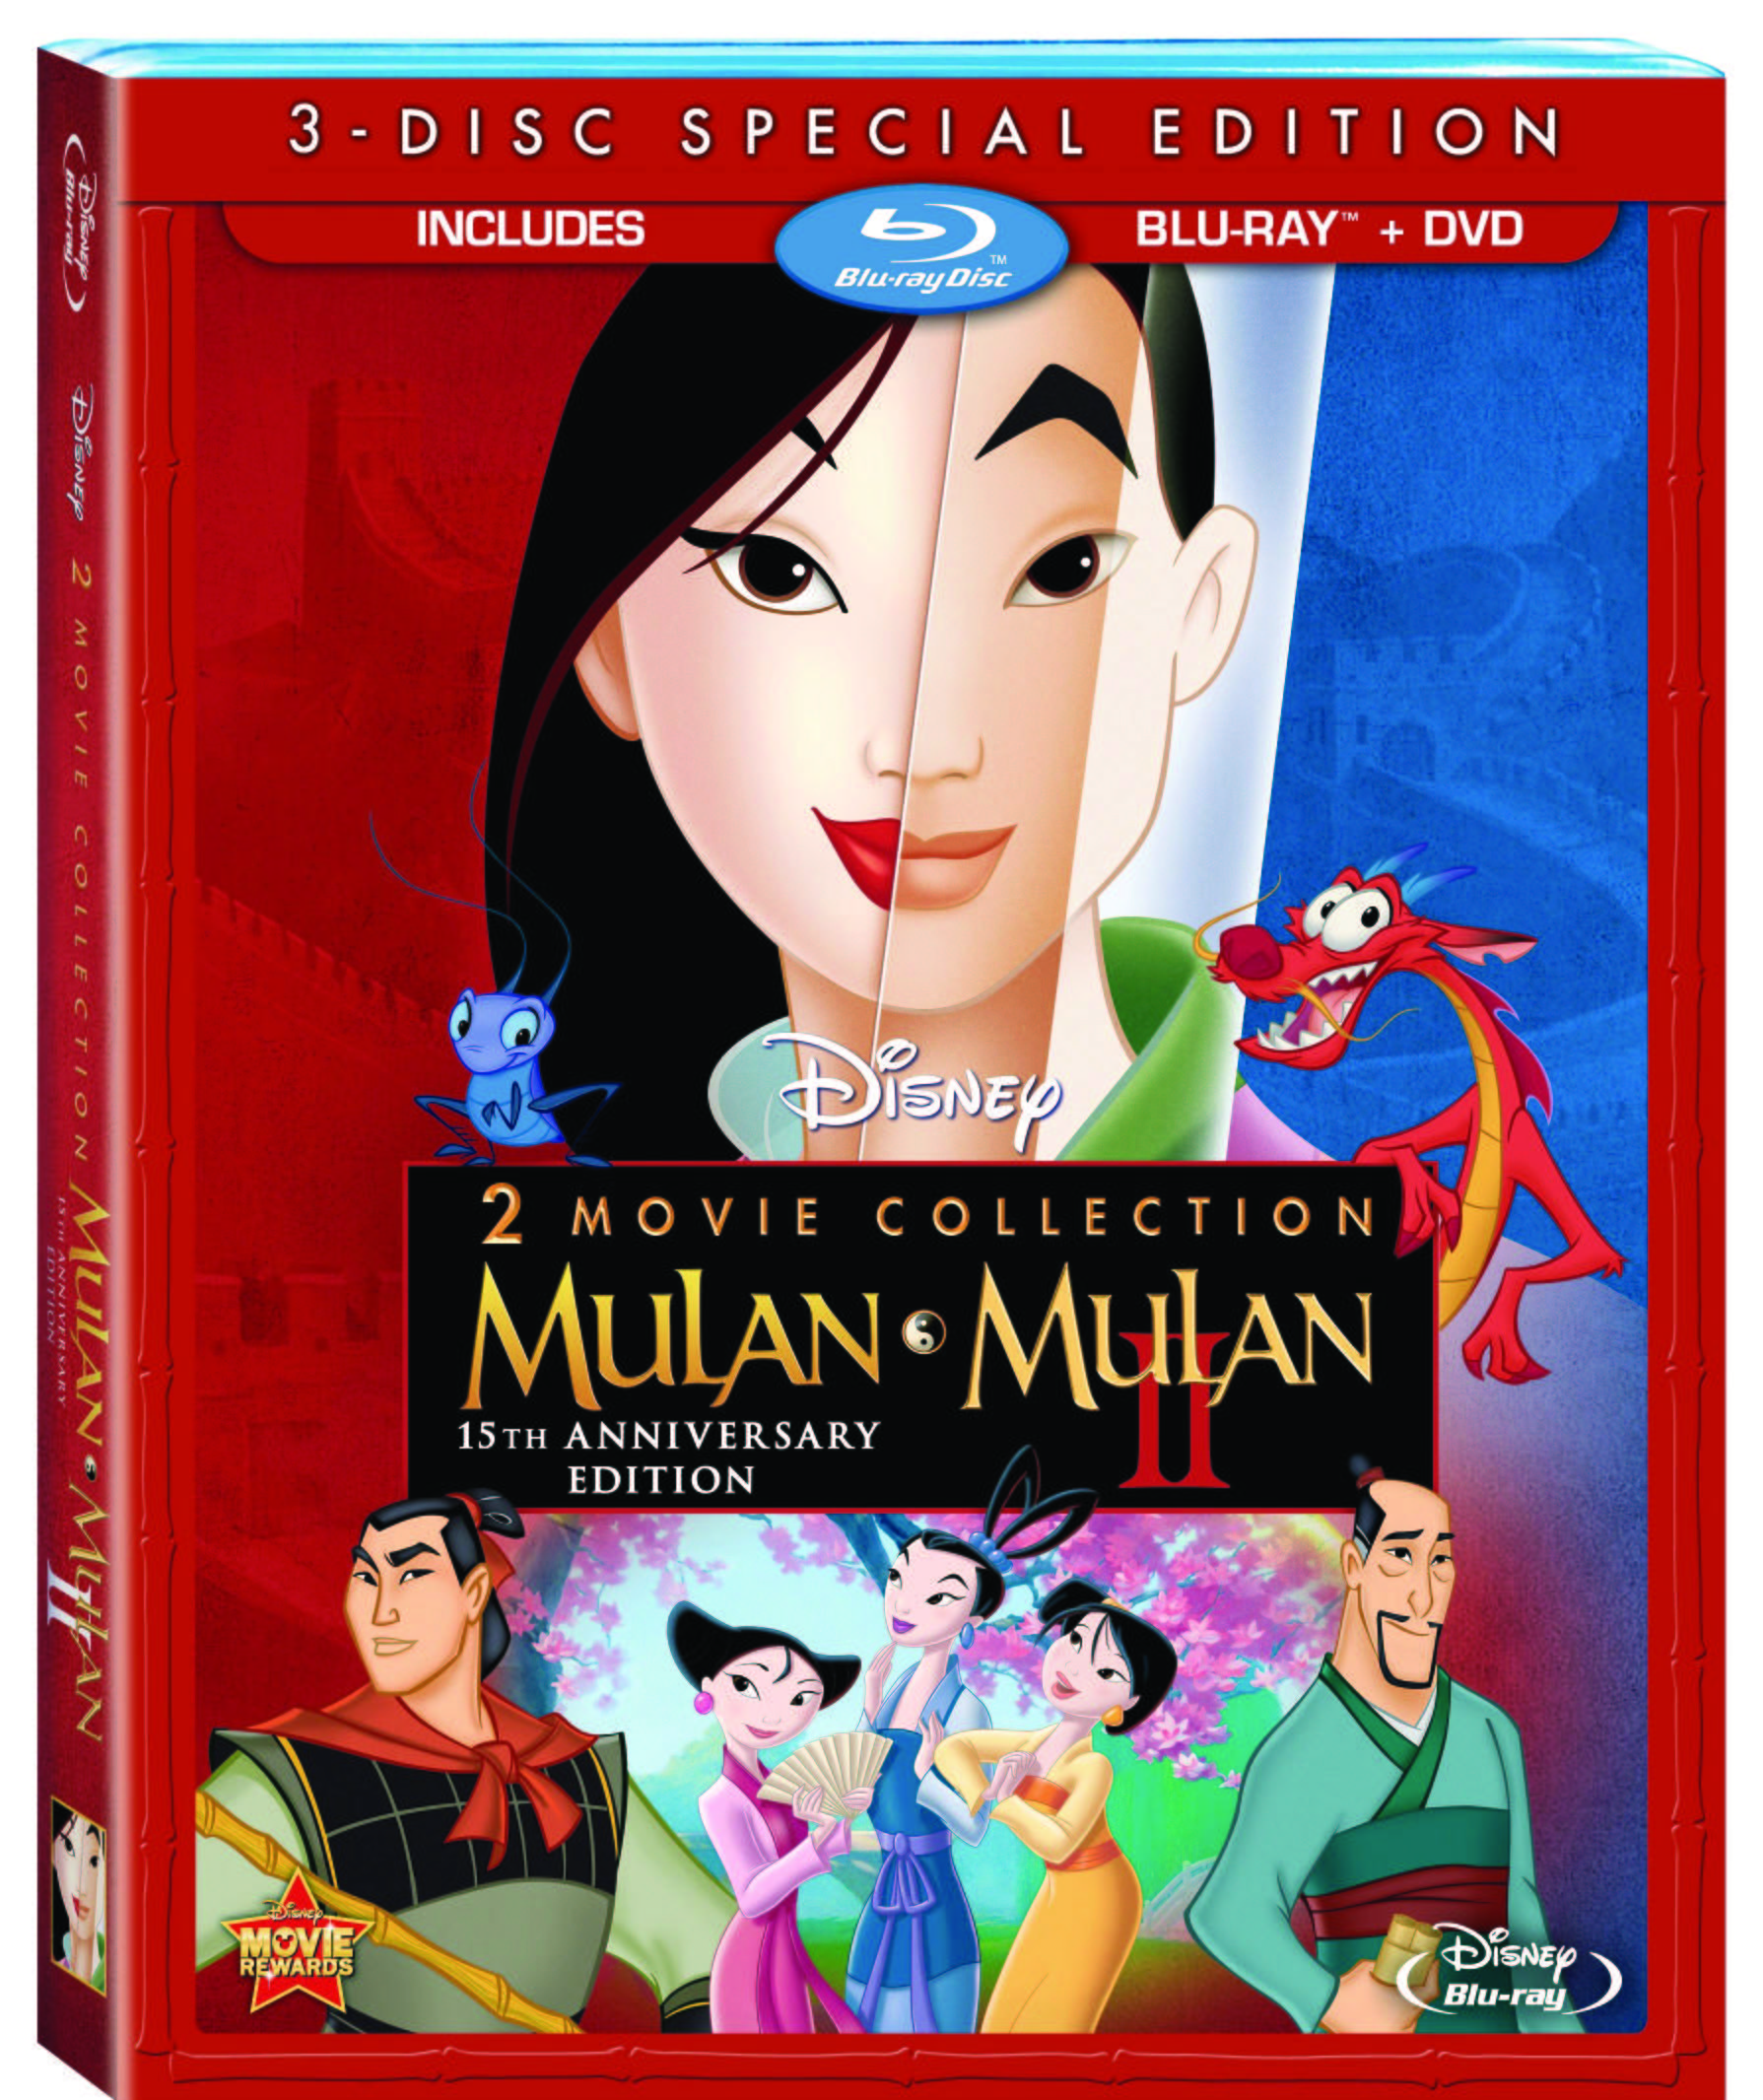 Mulan/Mulan II - Combo Pack Blu-ray 15th Anniversary Edition Debuts #DisneyOzEvent #Mulan